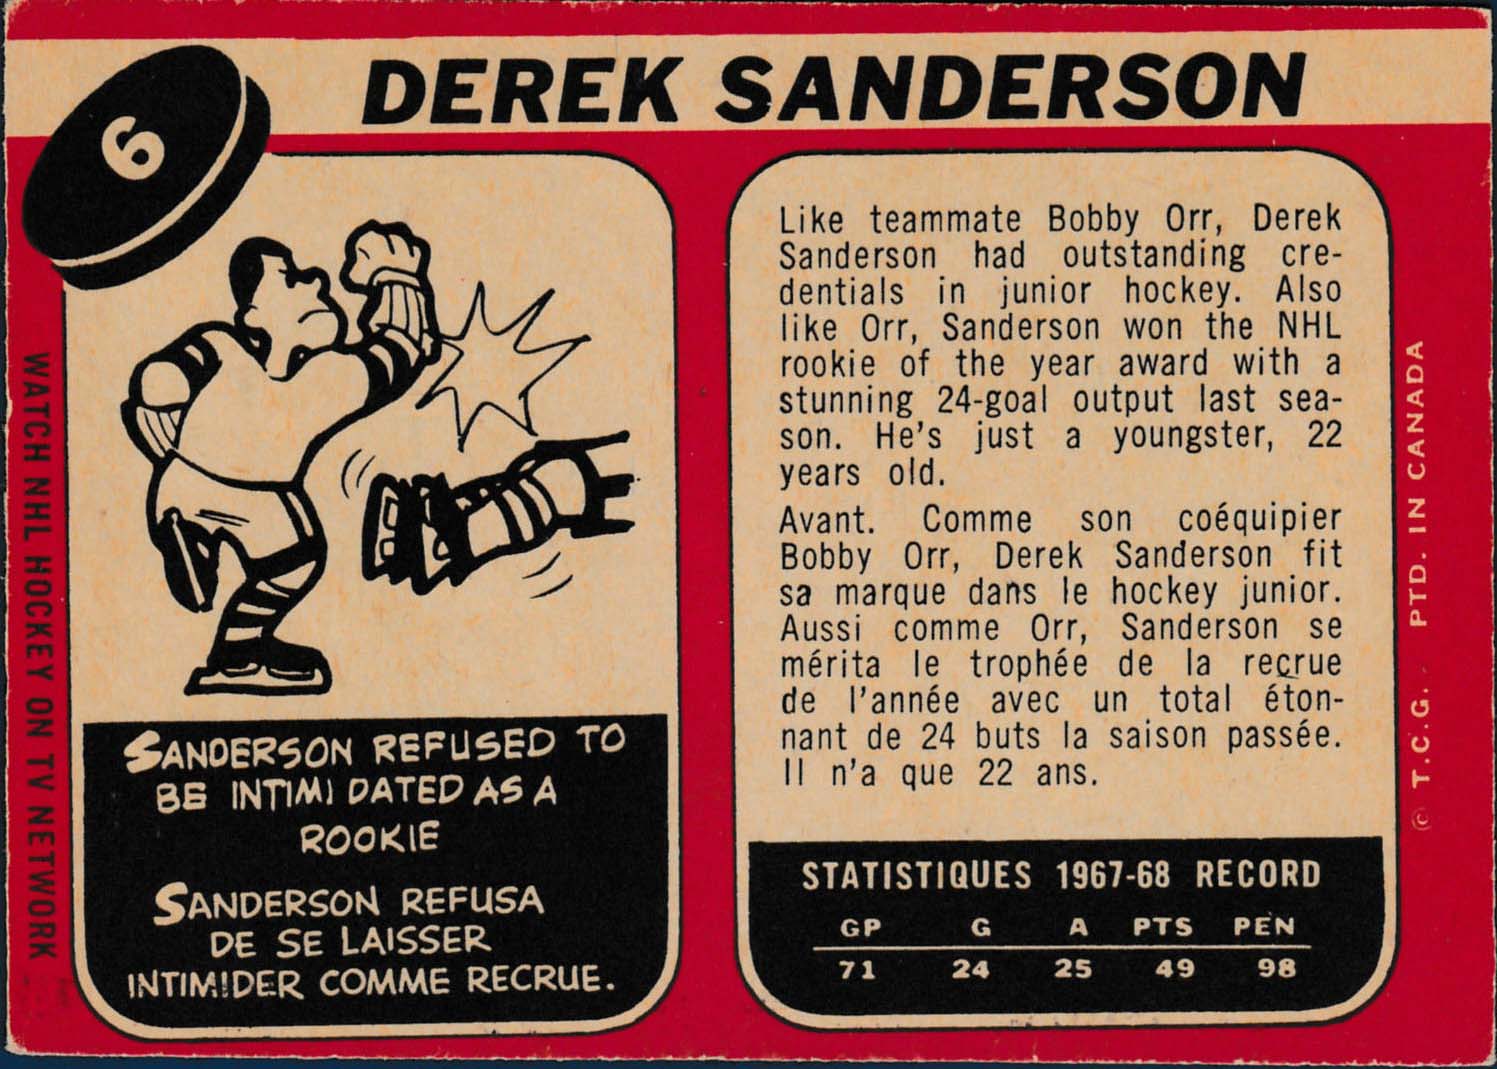 Derek Sanderson - Wikipedia